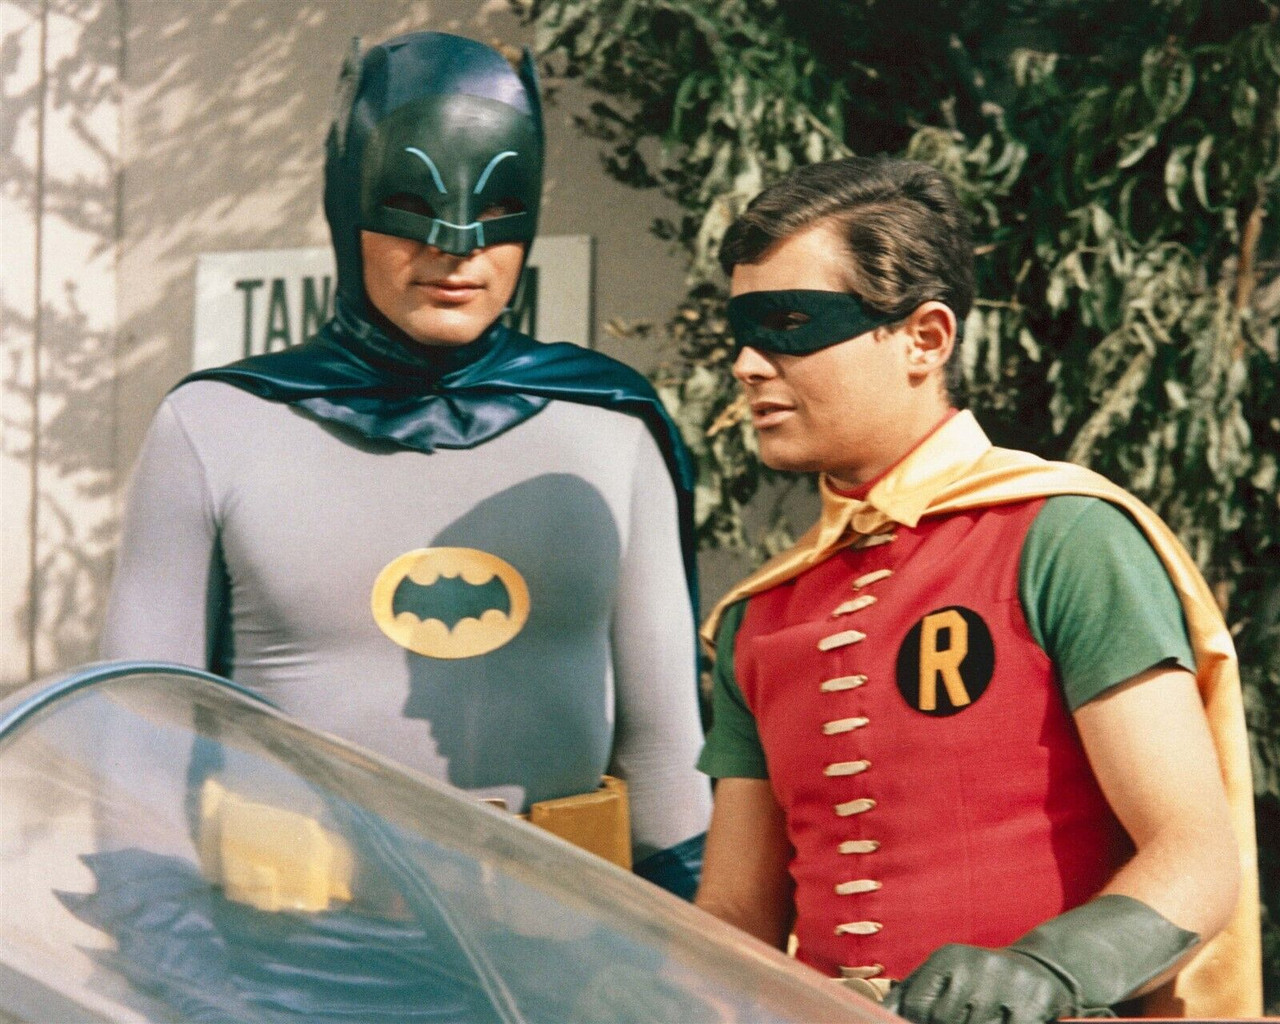 Batman 1966 Adam West & Burt Ward Batman & Robin by Batmobile 8x10 inch  photo - The Movie Store